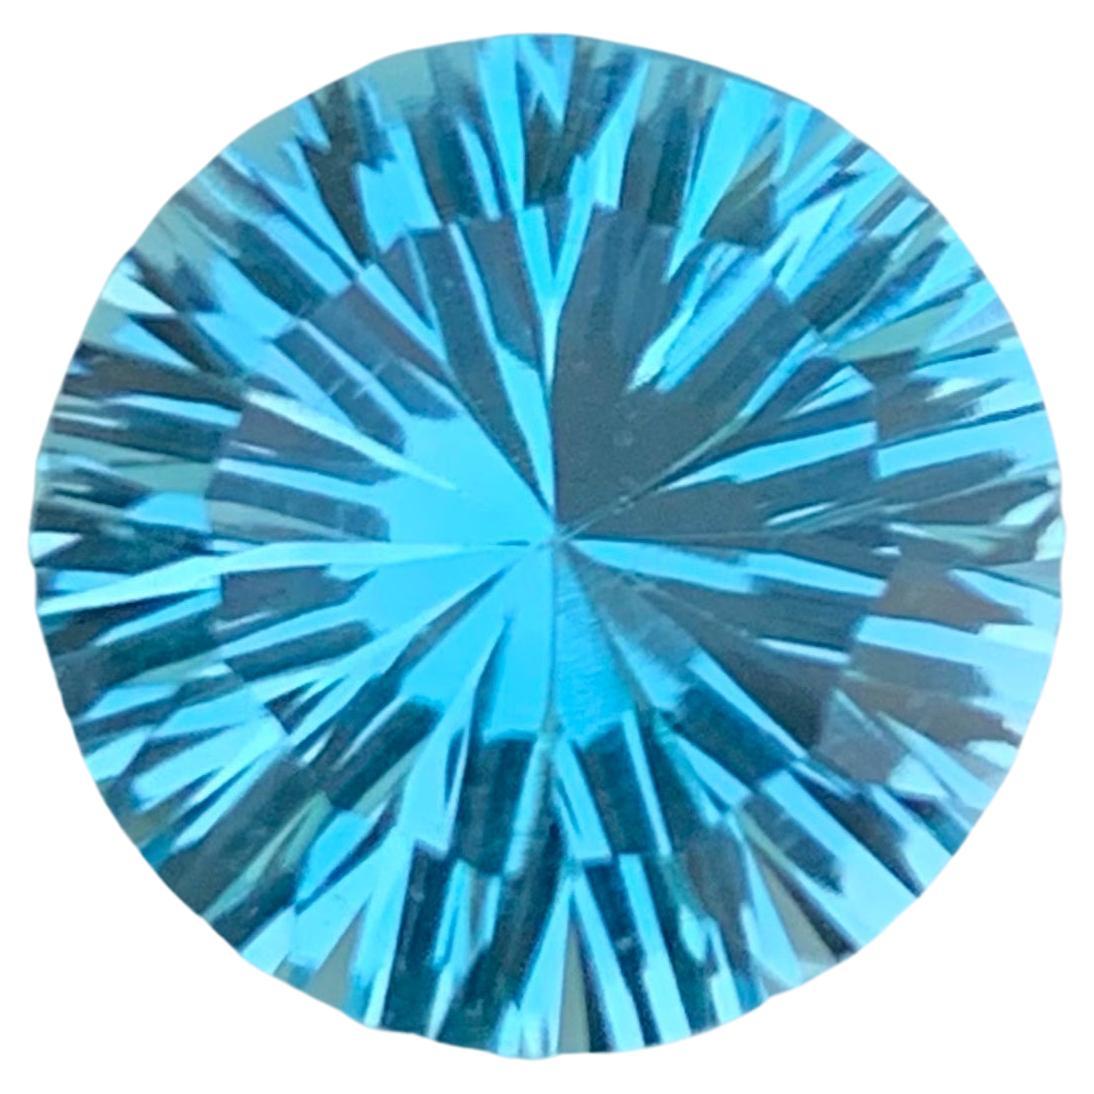 Stunning Natural Loose Topaz Gemstone 6.65 Carats Round Blue Topaz Stone 